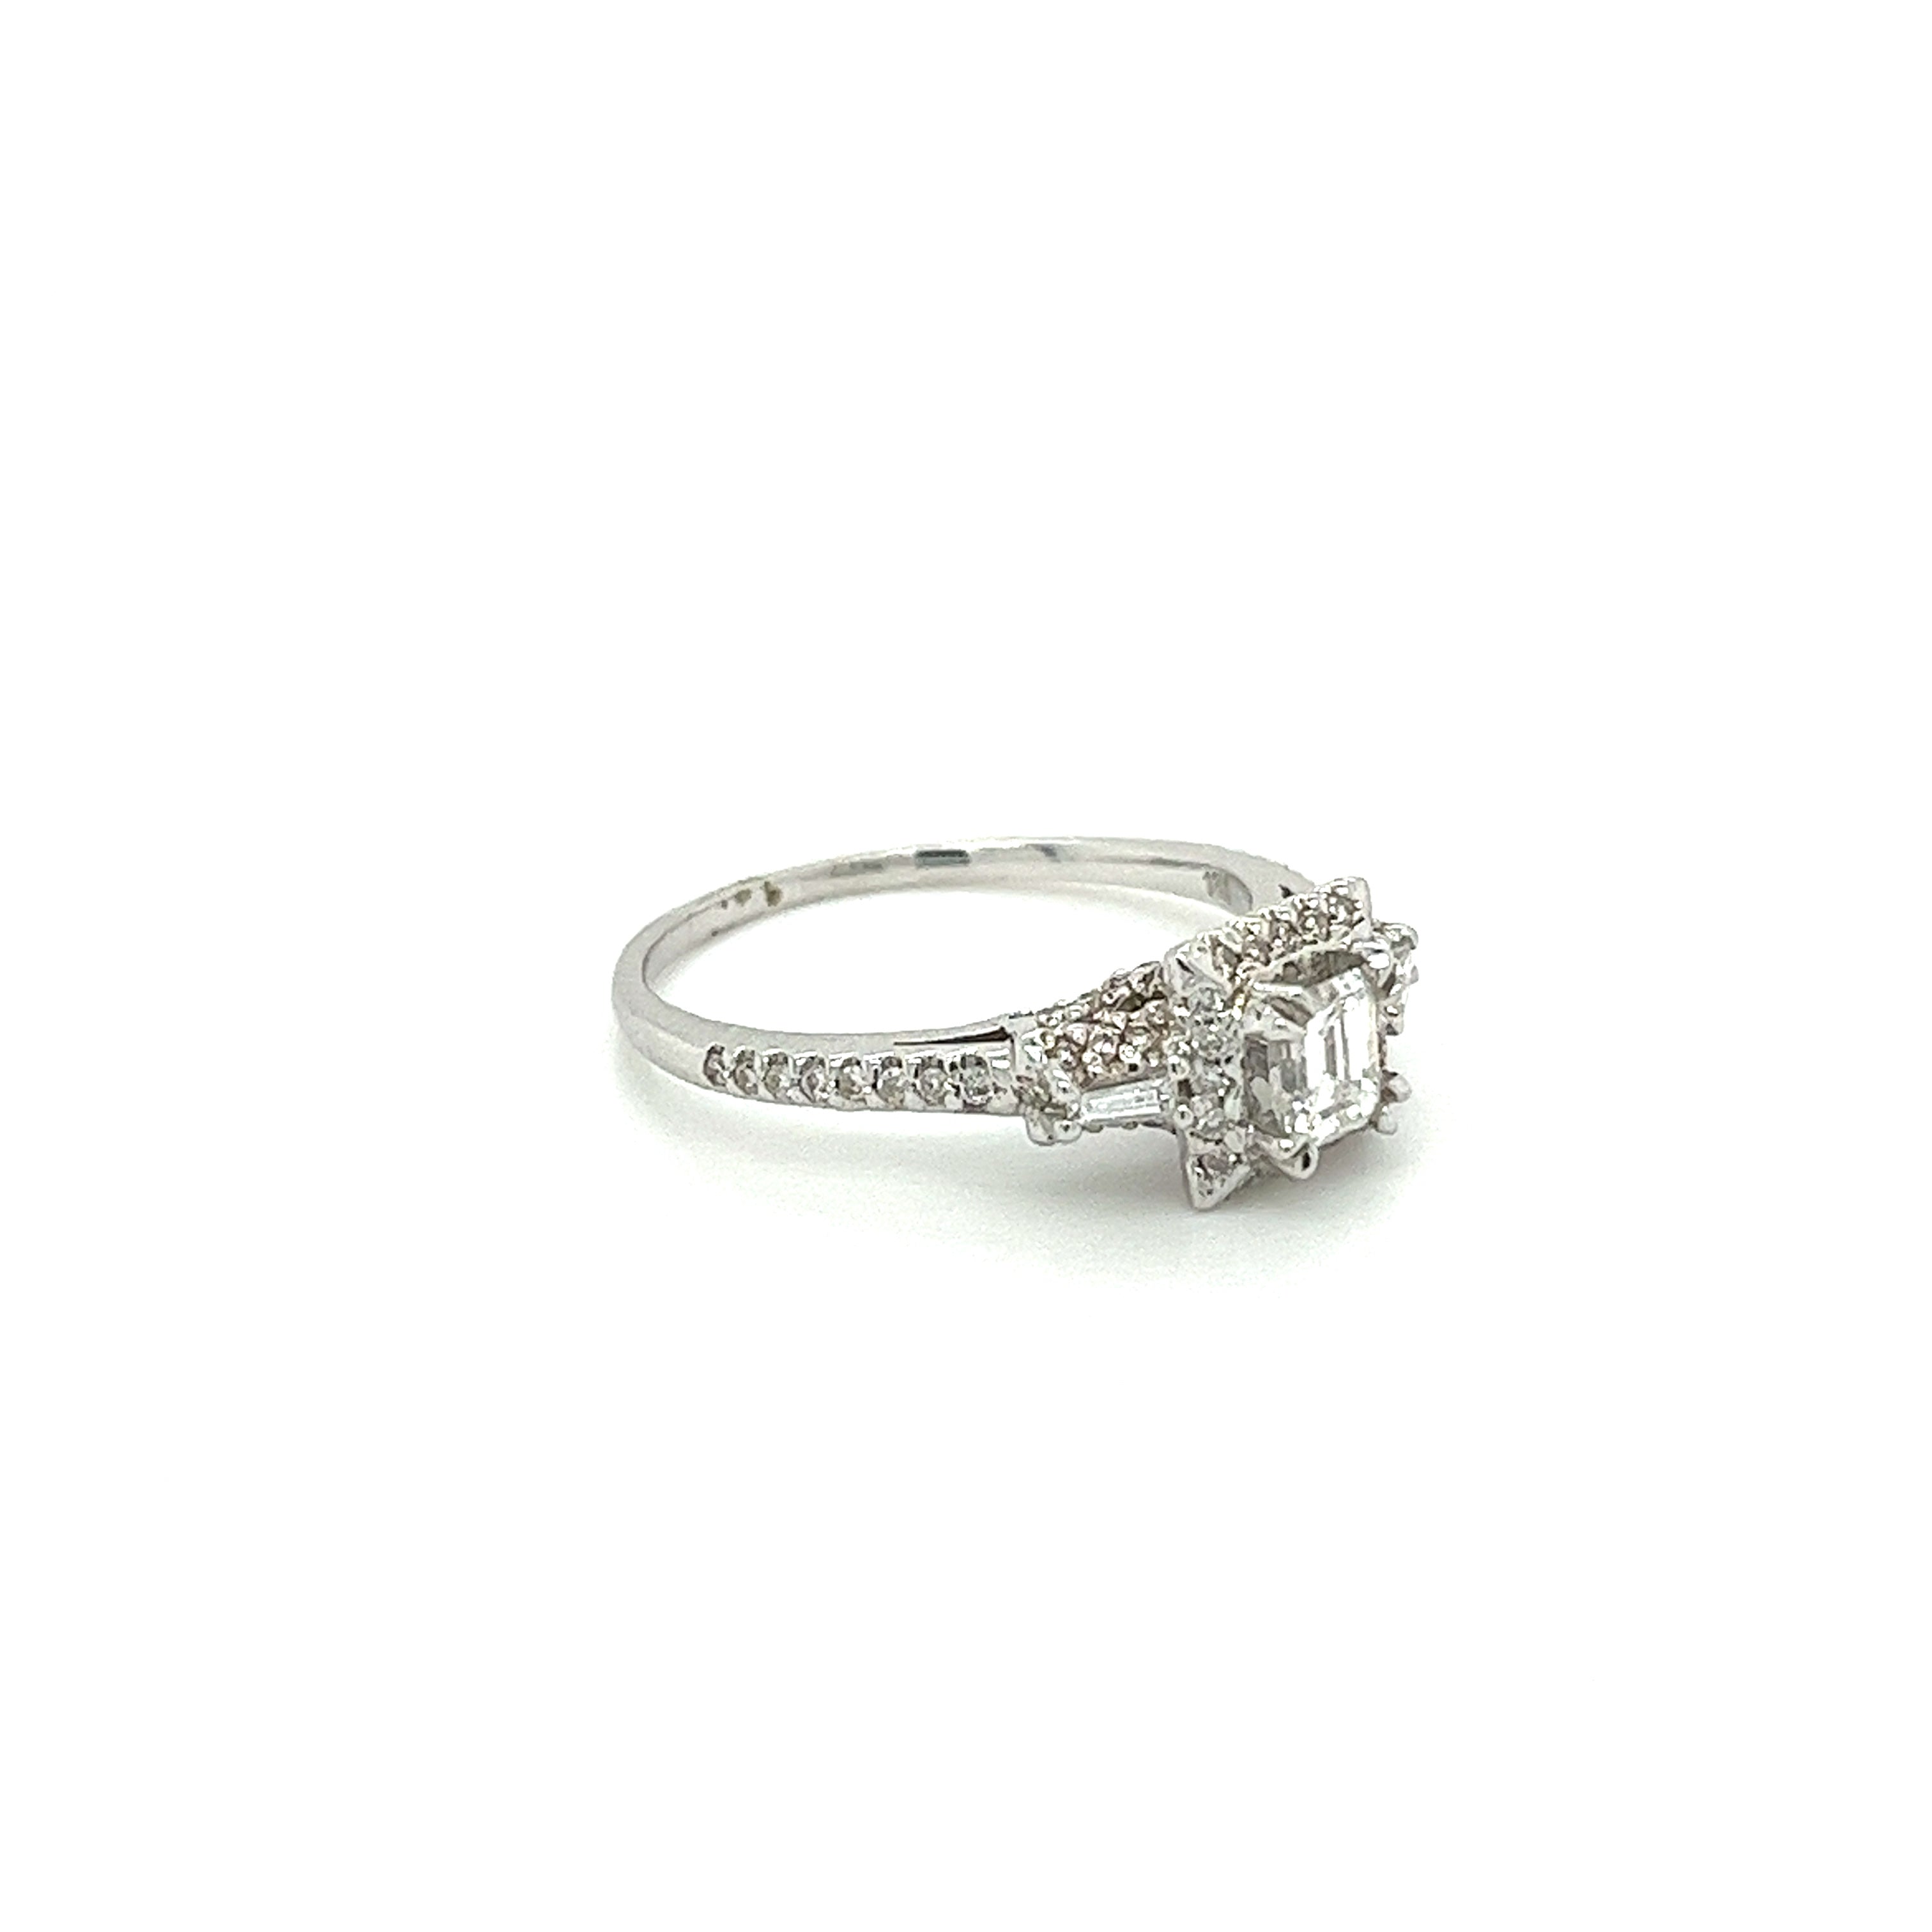 Vintage-Dainty-Emerald-Cut-Natural-Diamond-Ring-in-18K-White-Gold-Rings-2.jpg